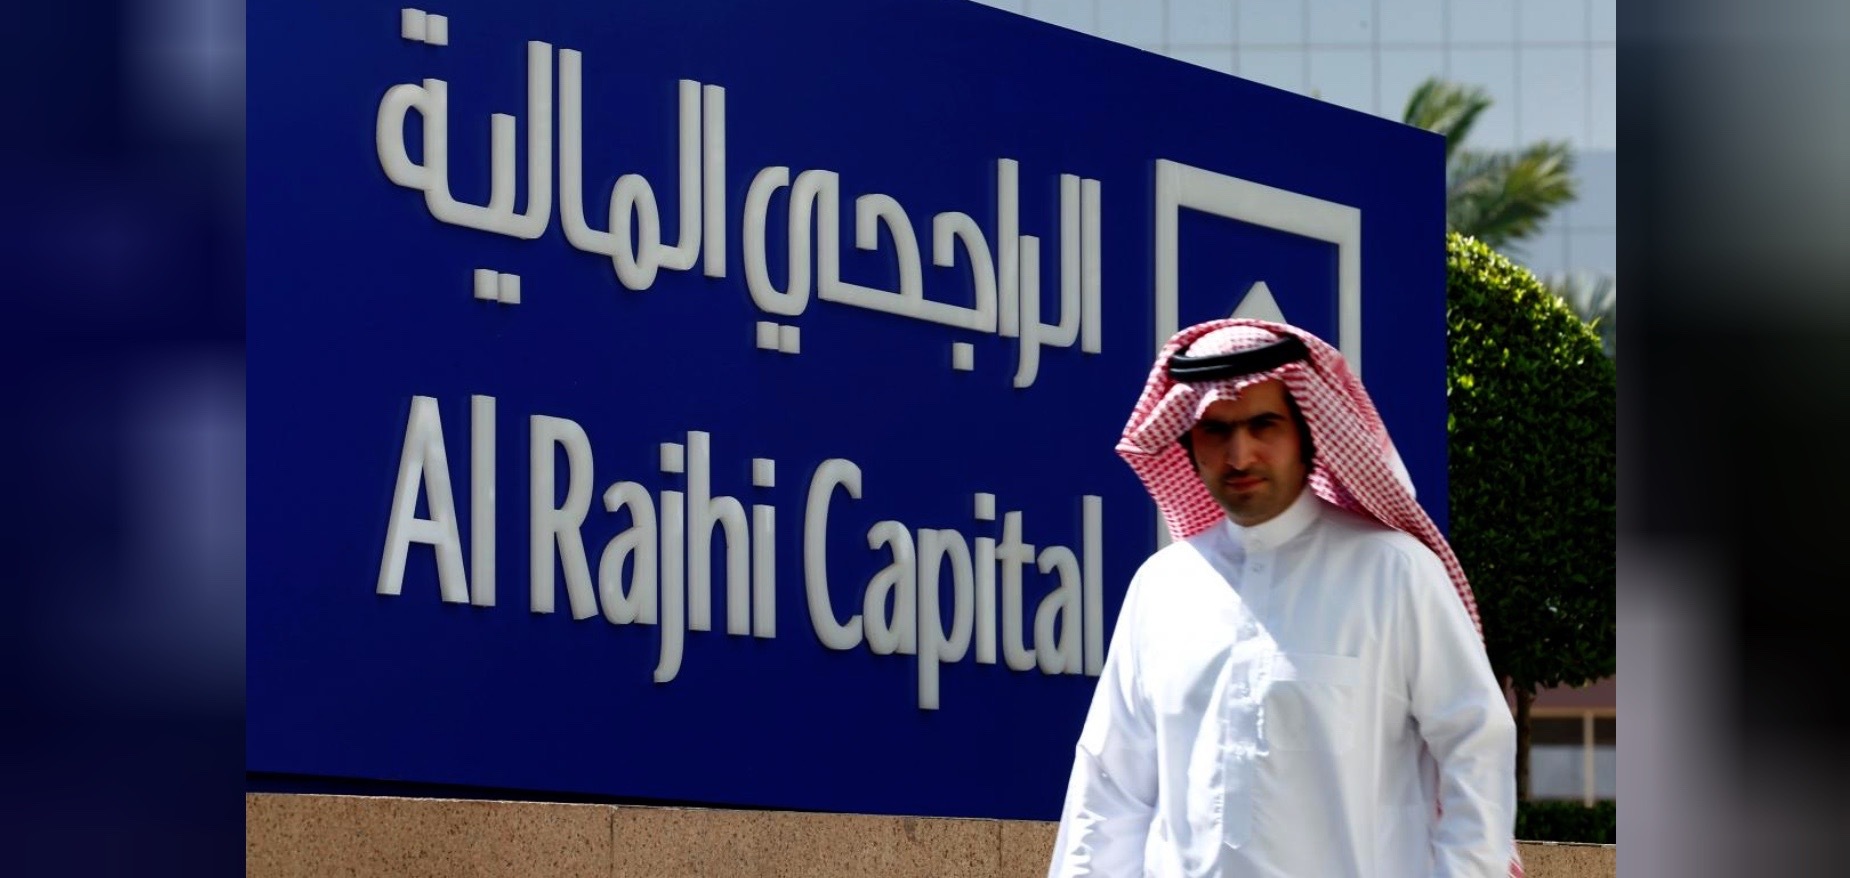 Jump In Islamic Tax Liabilities Worries Saudi Banks